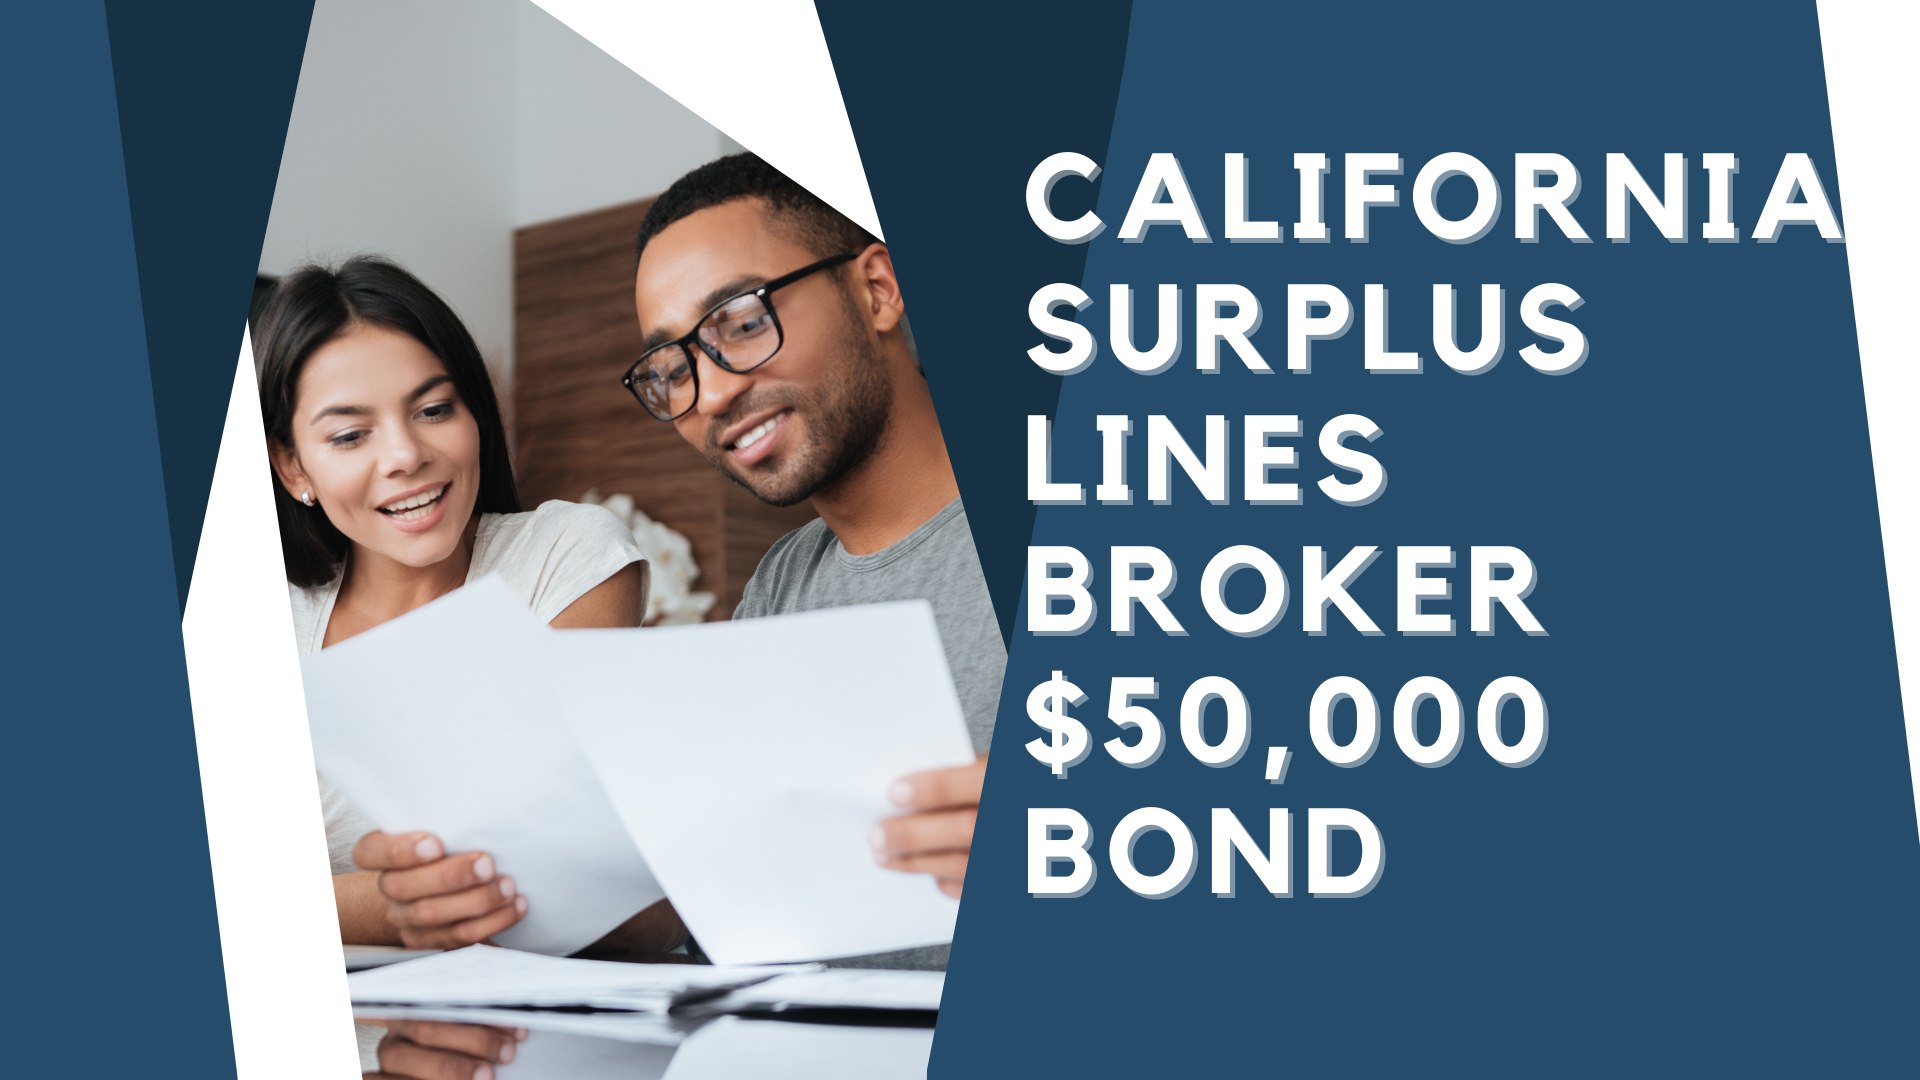 Surety Bond-California Surplus Lines Broker $50,000 Bond